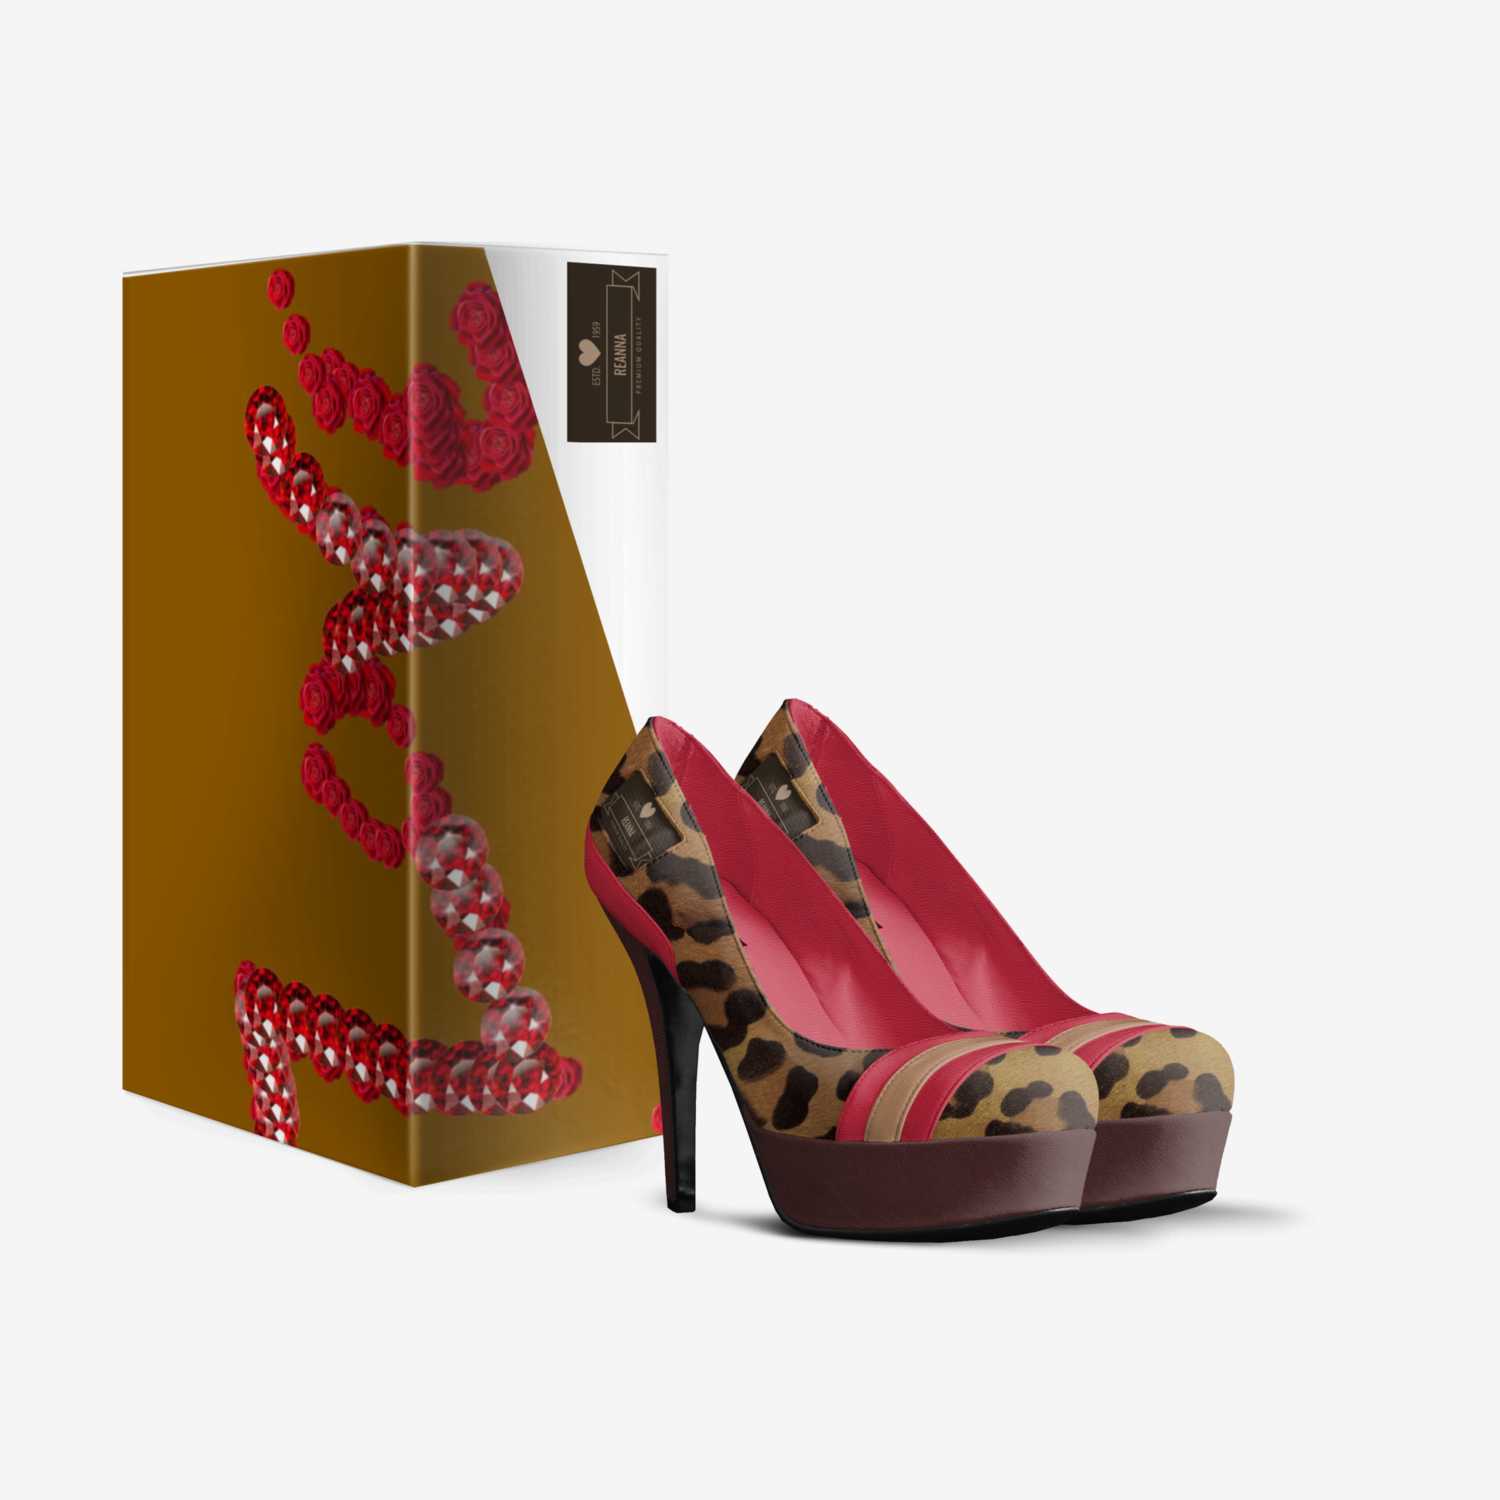 REANNA custom made in Italy shoes by Amanda J. Itani | Box view